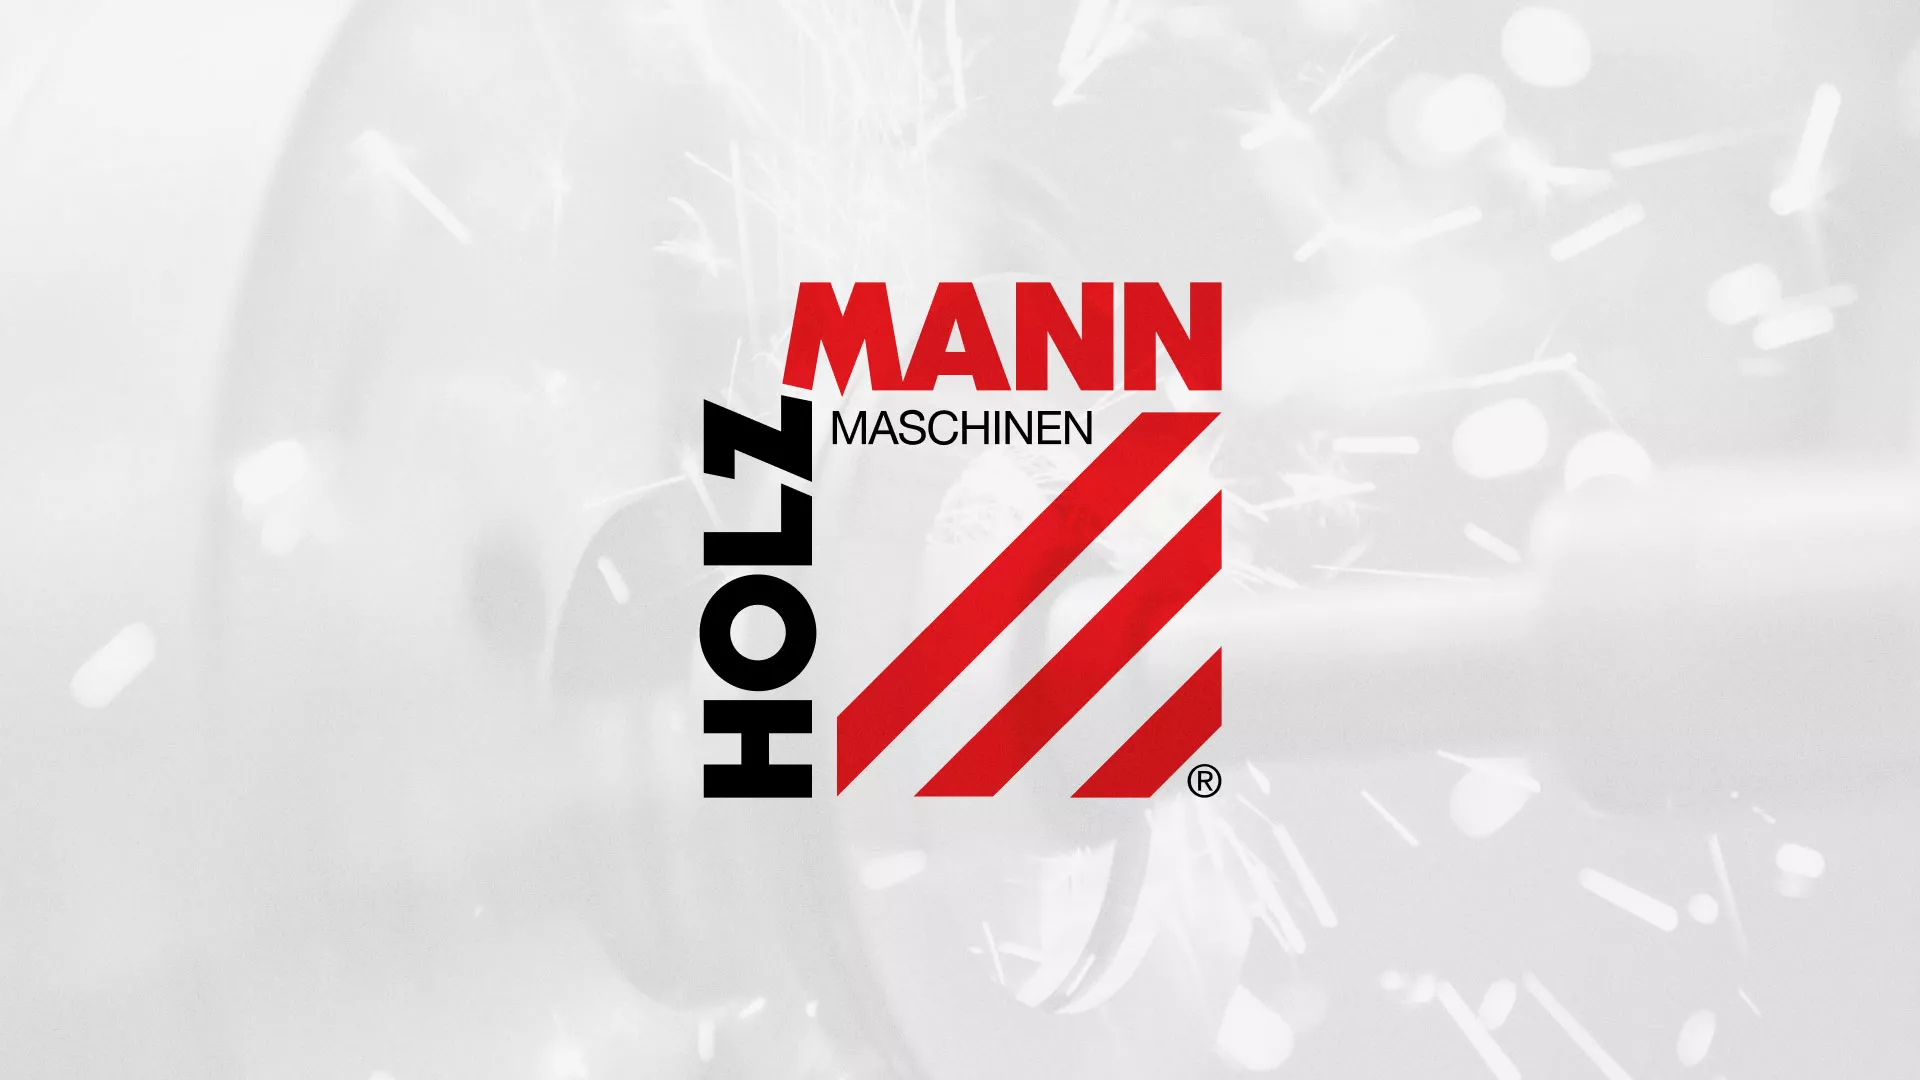 Создание сайта компании «HOLZMANN Maschinen GmbH» в Искитиме